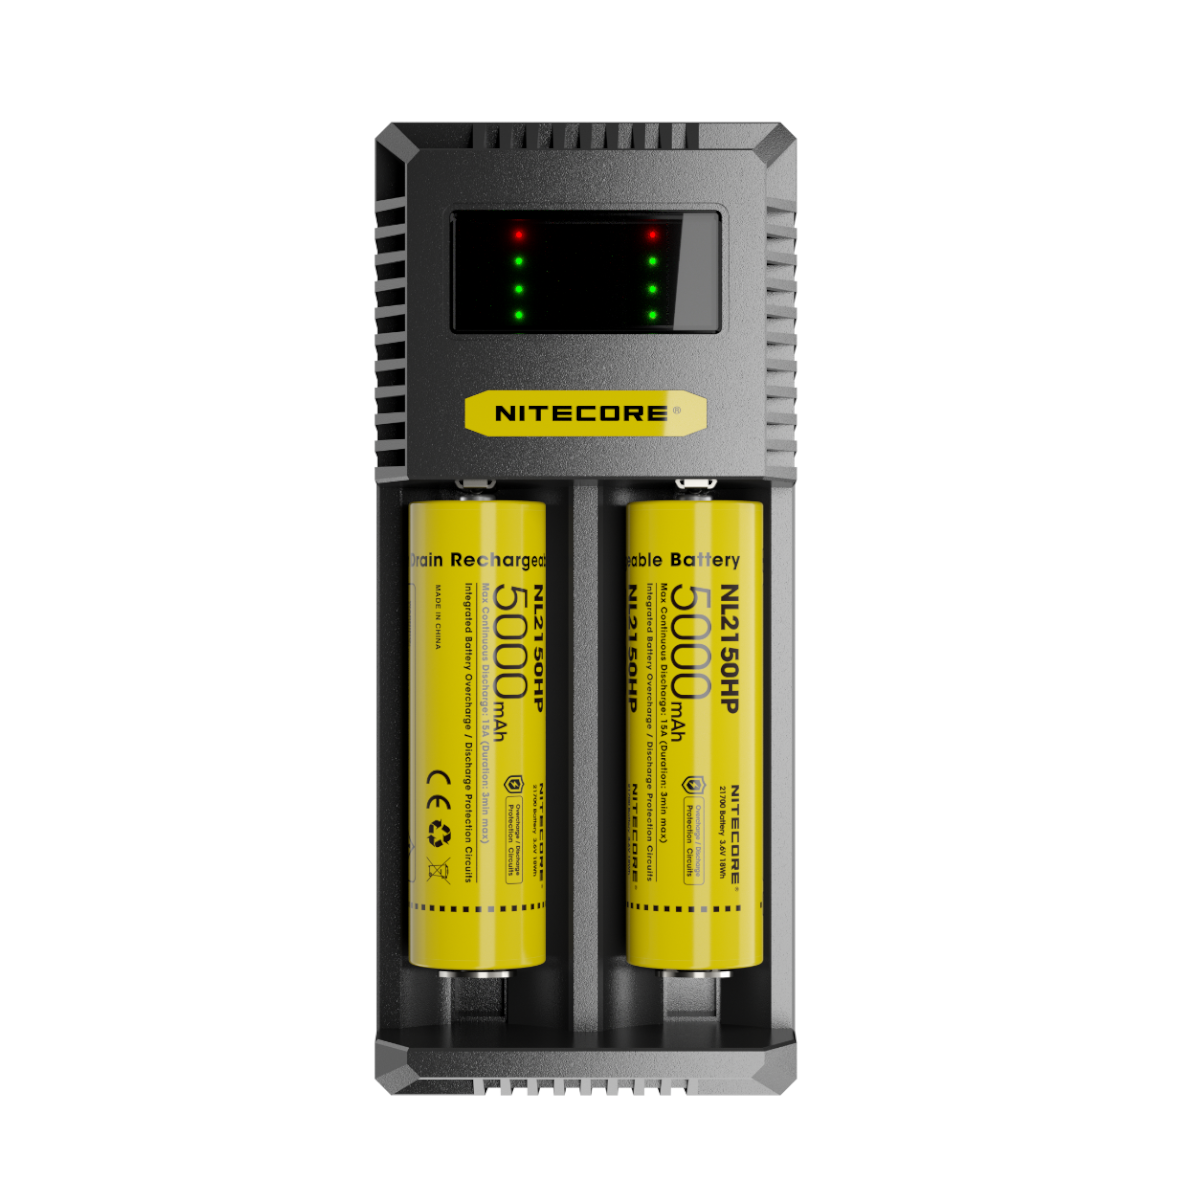 

NITECORE Ci2 3000mA USB-C Quick Charging Intelligent Battery Charger For IMR/Li-ion Ni-MH/Ni-Cd 18650 21700 22650 AA AAA